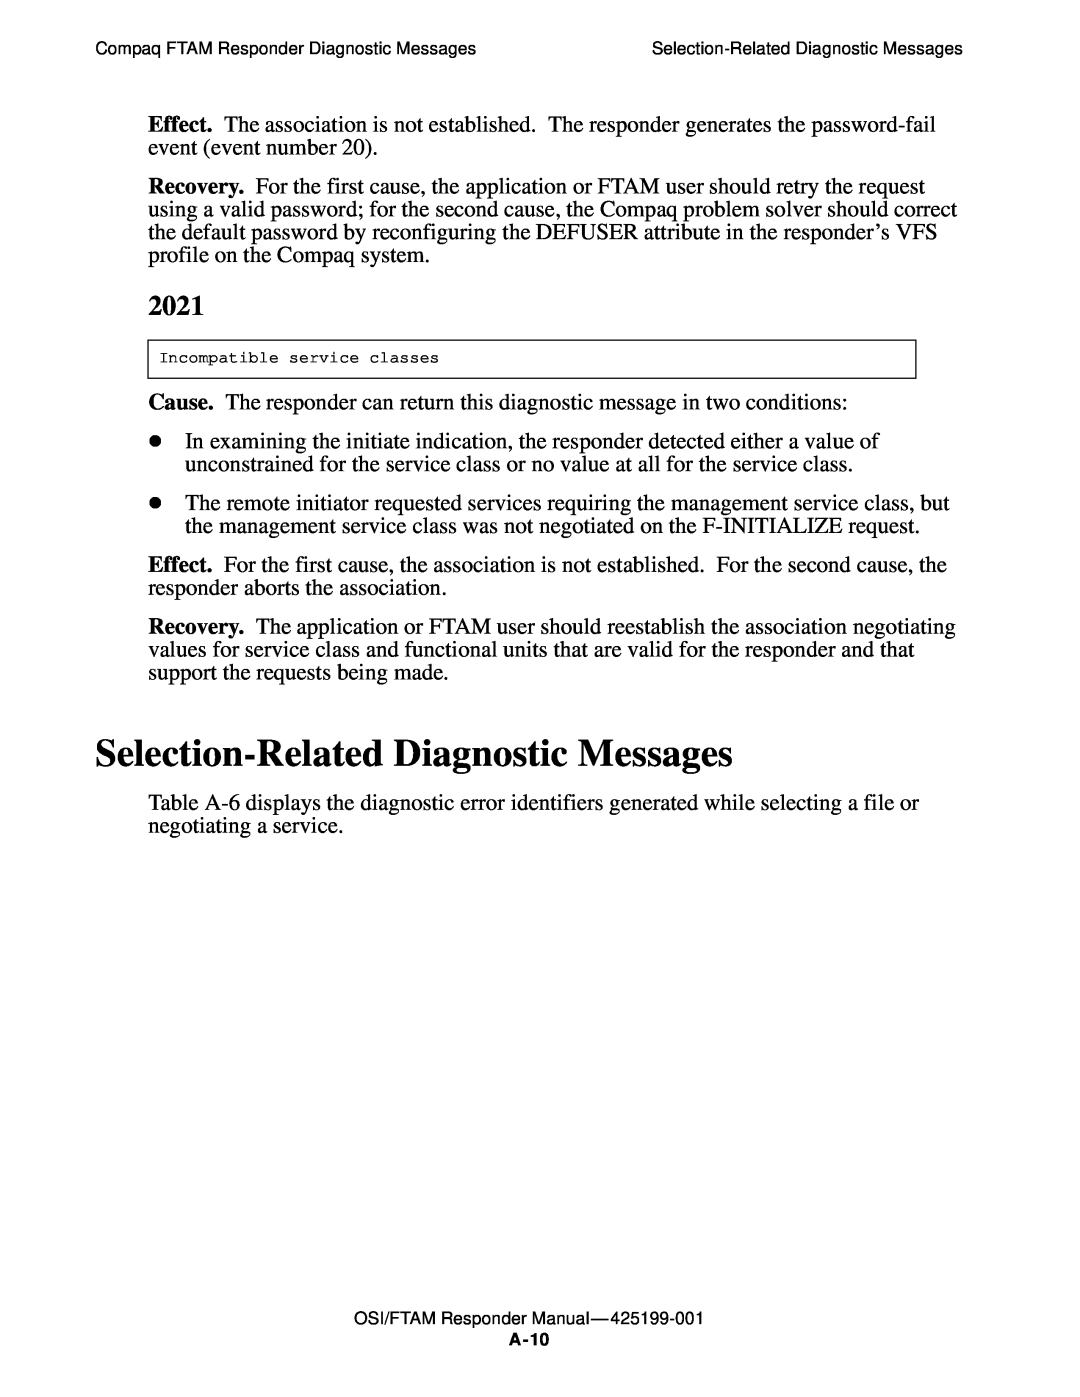 Compaq OSI/APLMGR D43, OSI/FTAM D43 manual Selection-Related Diagnostic Messages, 2021, A-10 